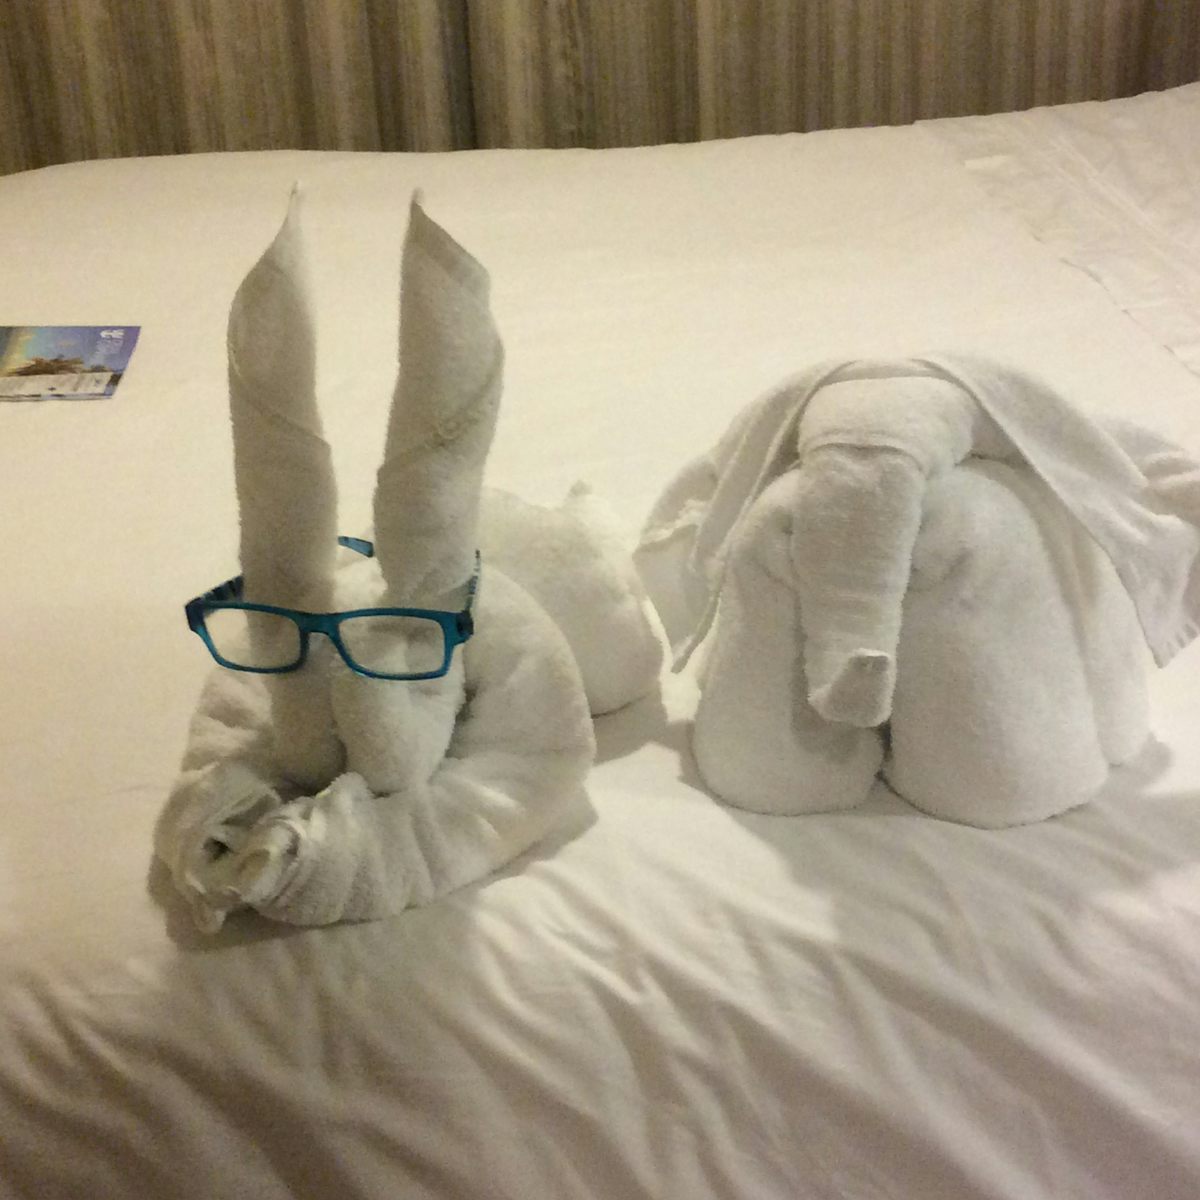 Towel animal wearing my reading glasses!